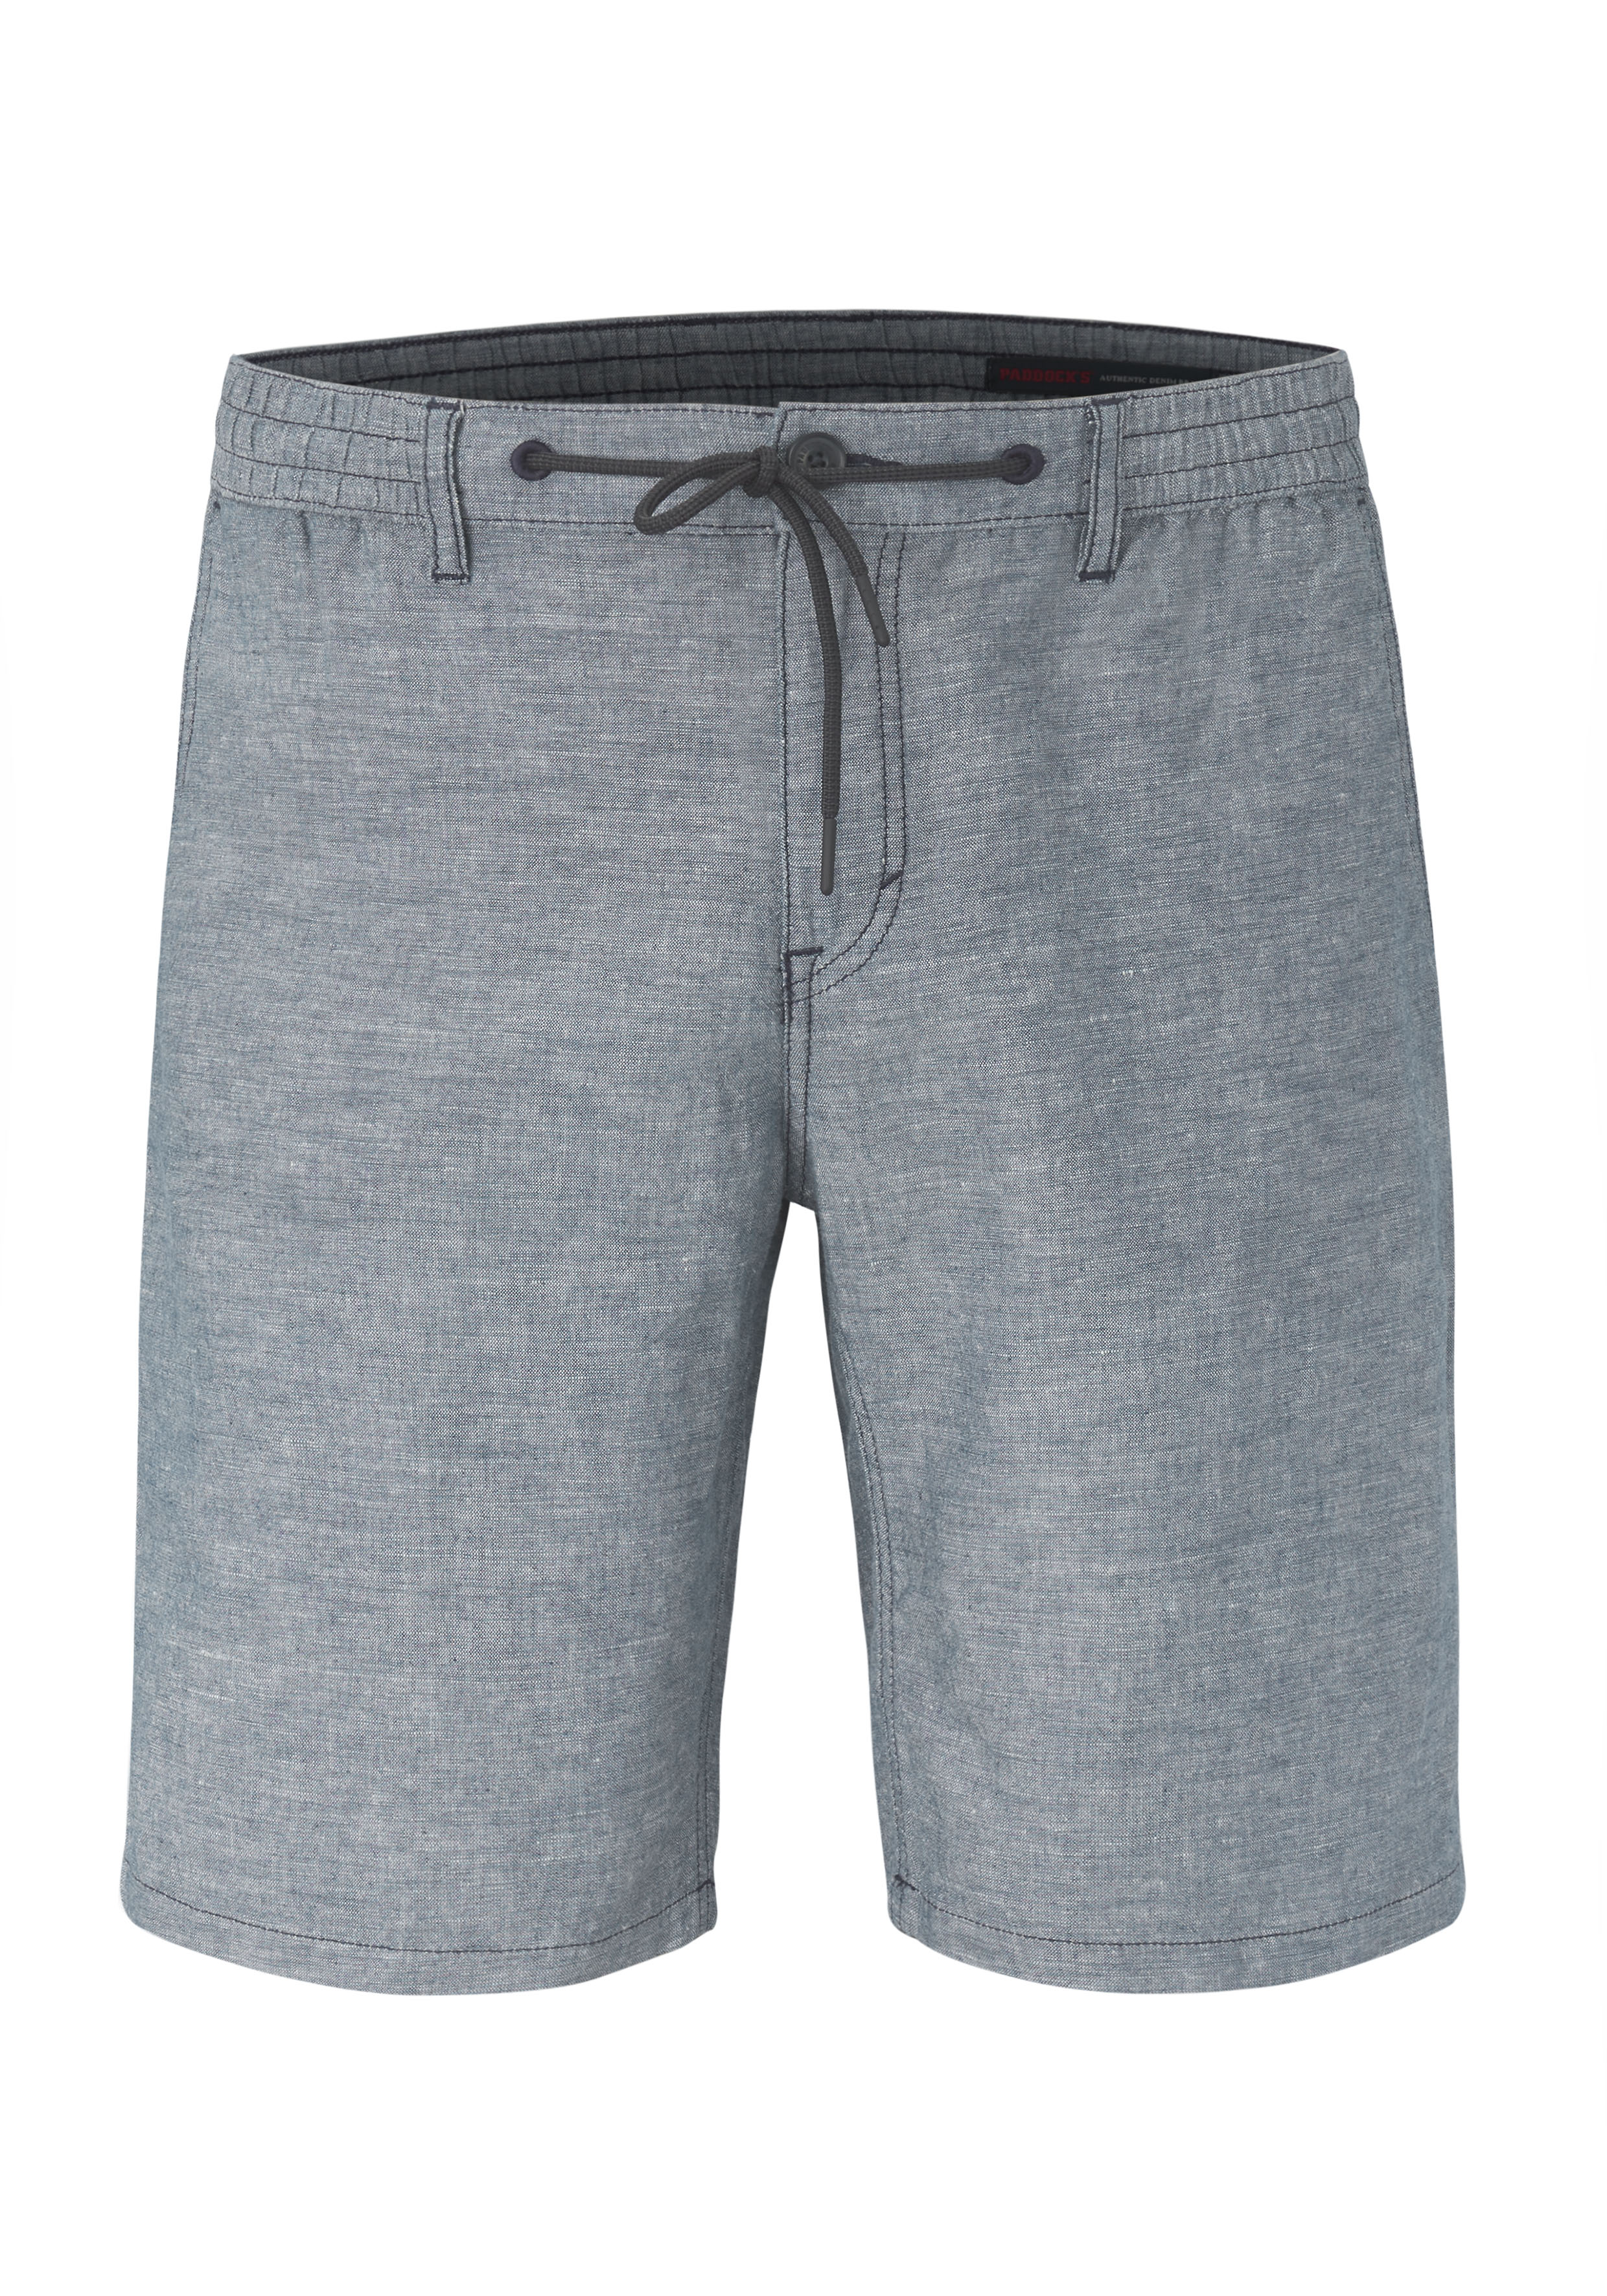 801627101000-0800_1_herren-bermudas-relaxed-fit-cotton-leinen-shorts-york-paddocks.jpg